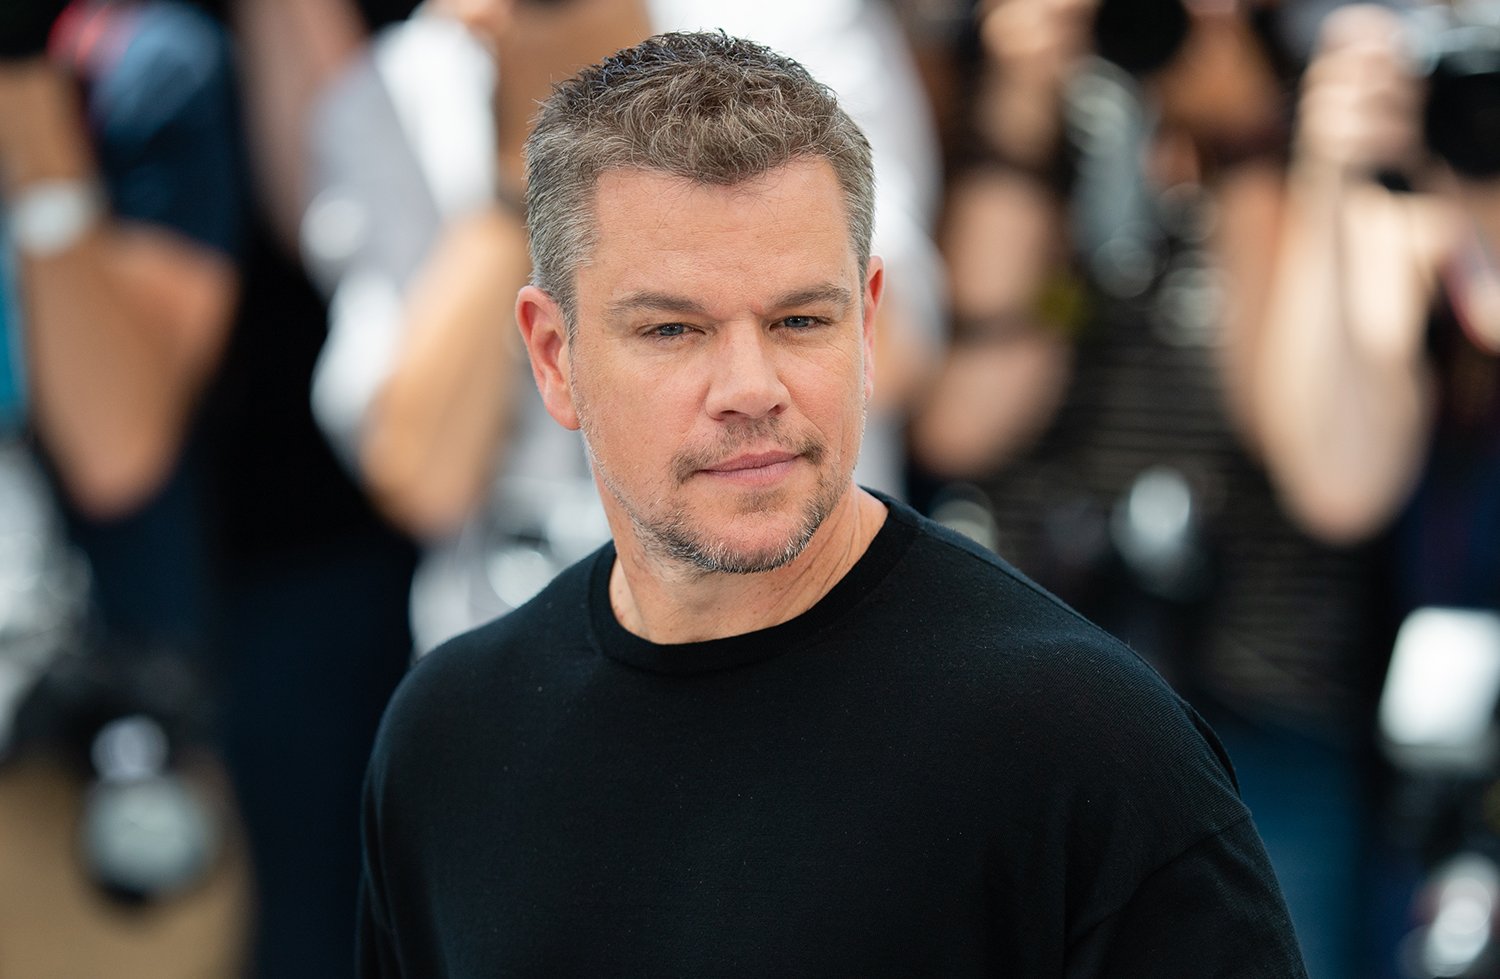 Matt Damon How Old Are the 'Stillwater' Star's Kids in 2021?